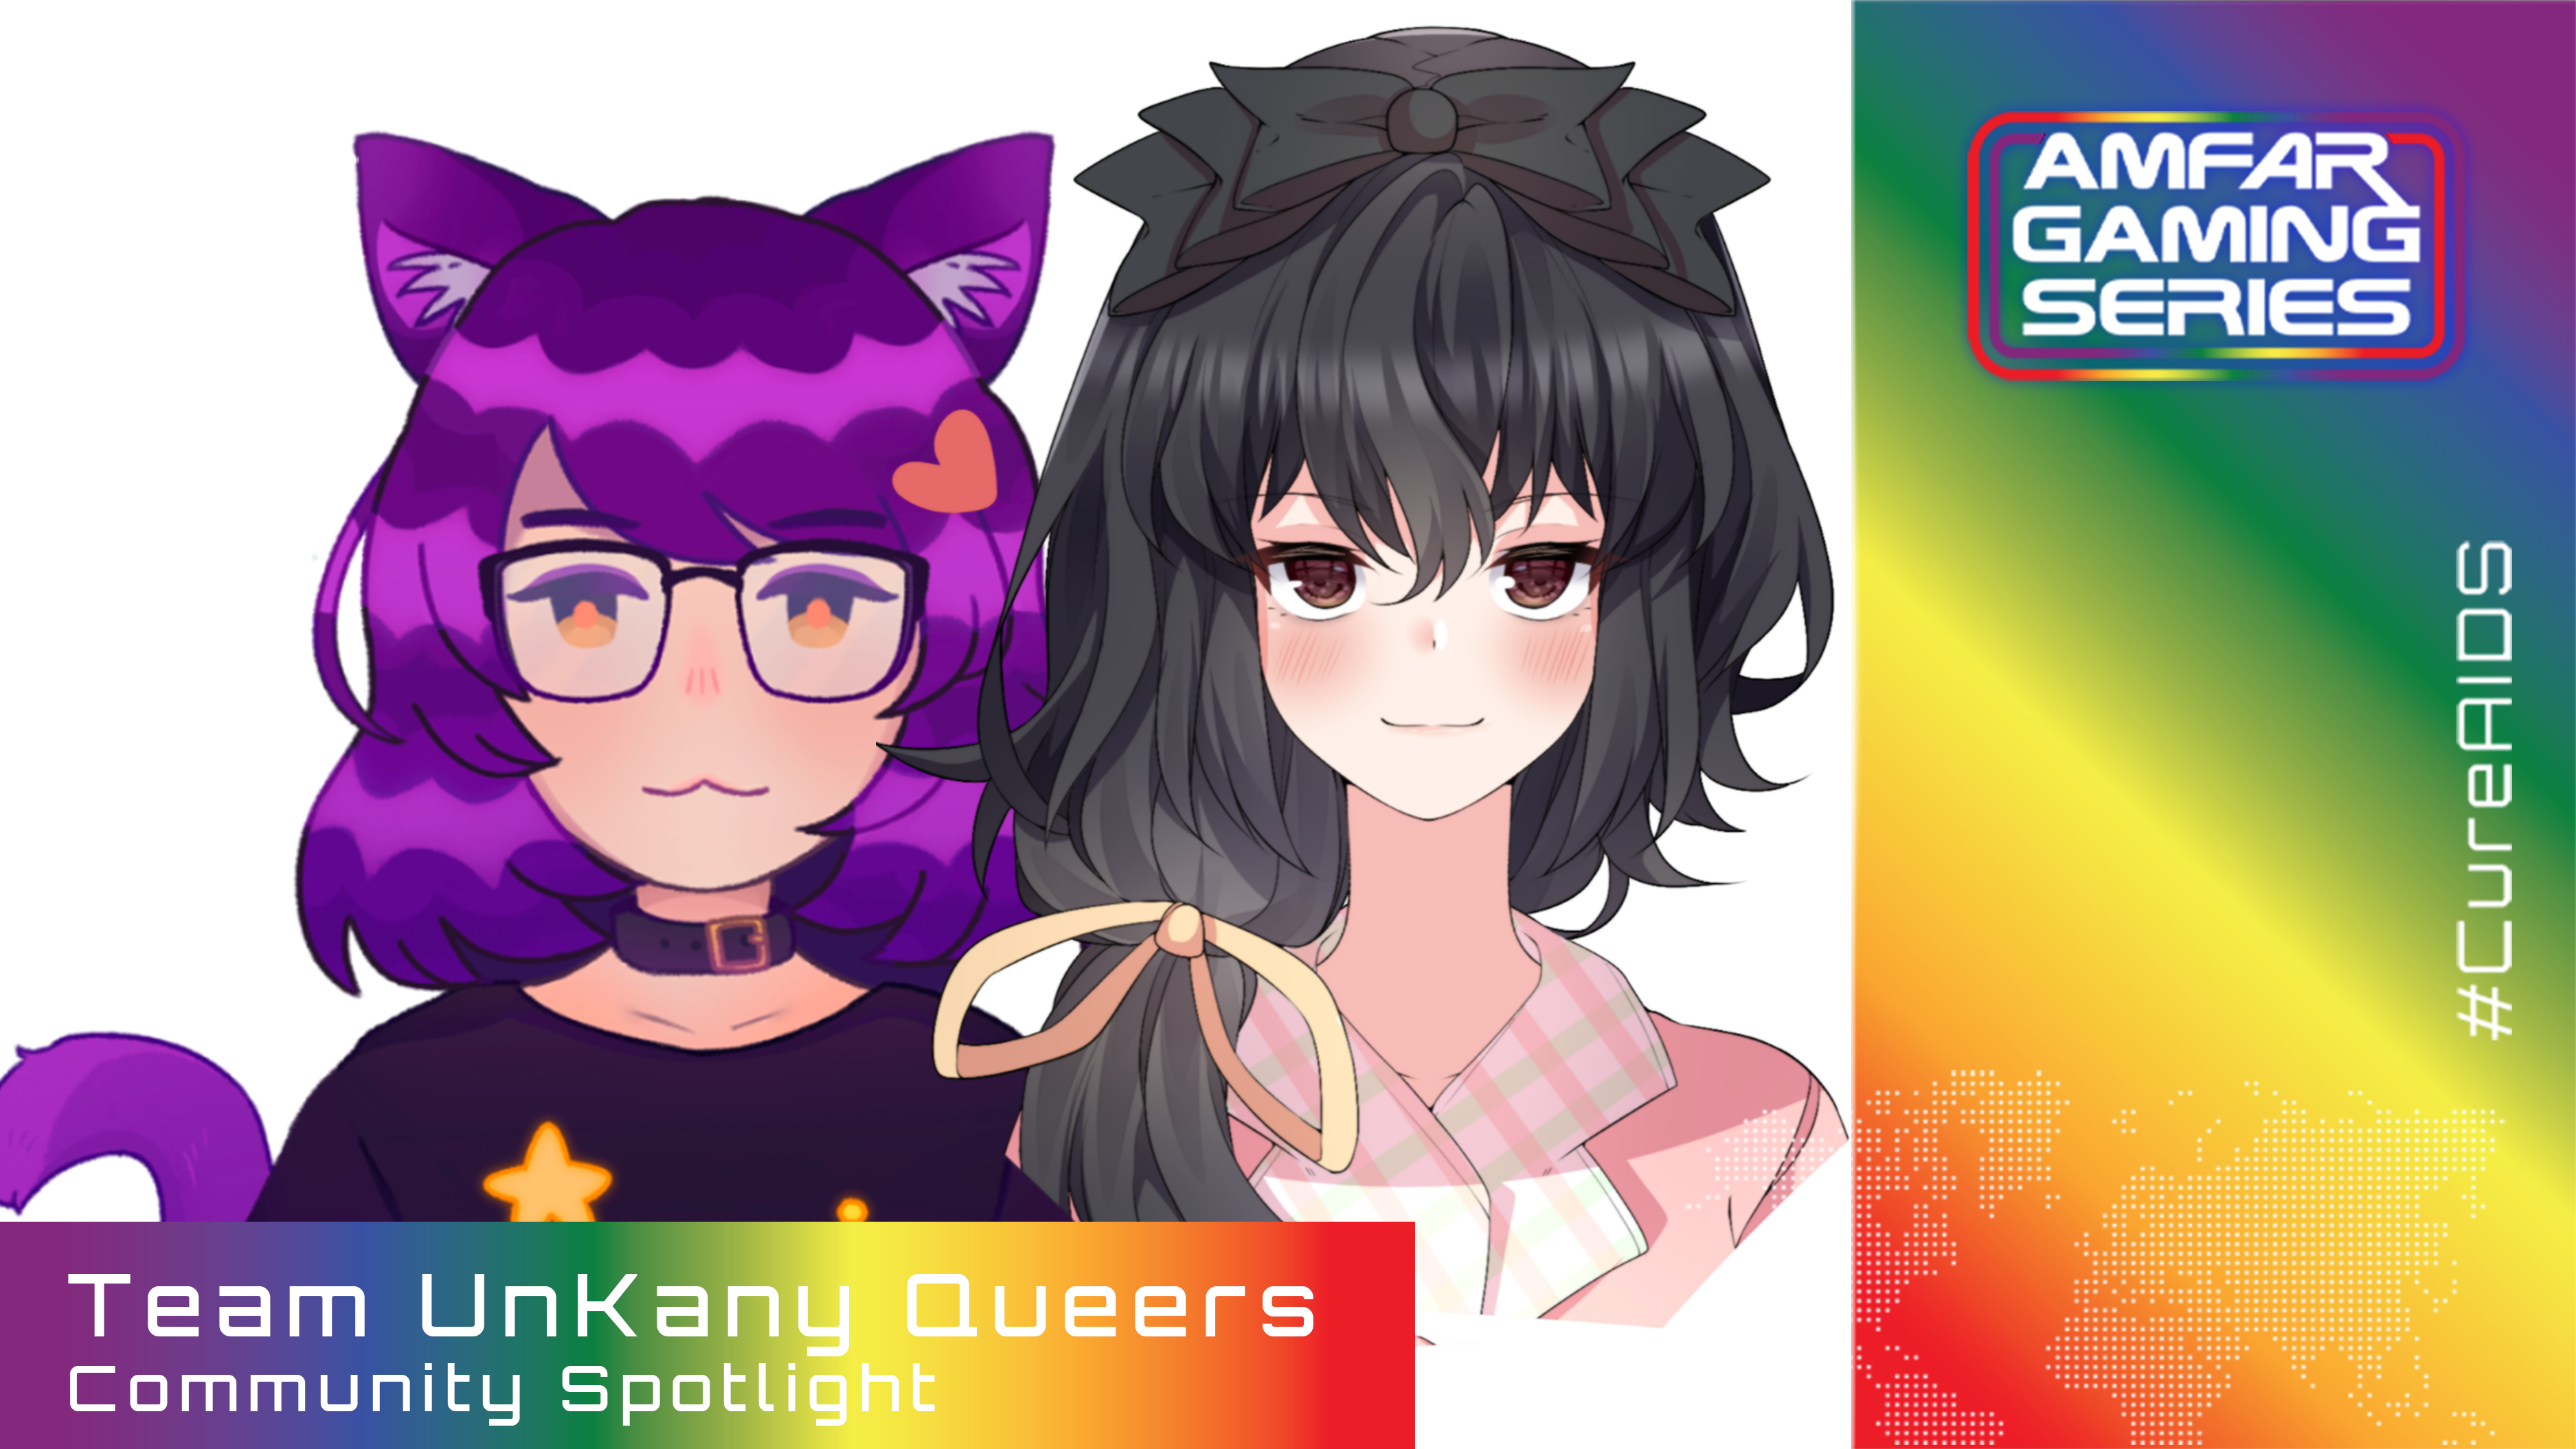 The UnKany Queers